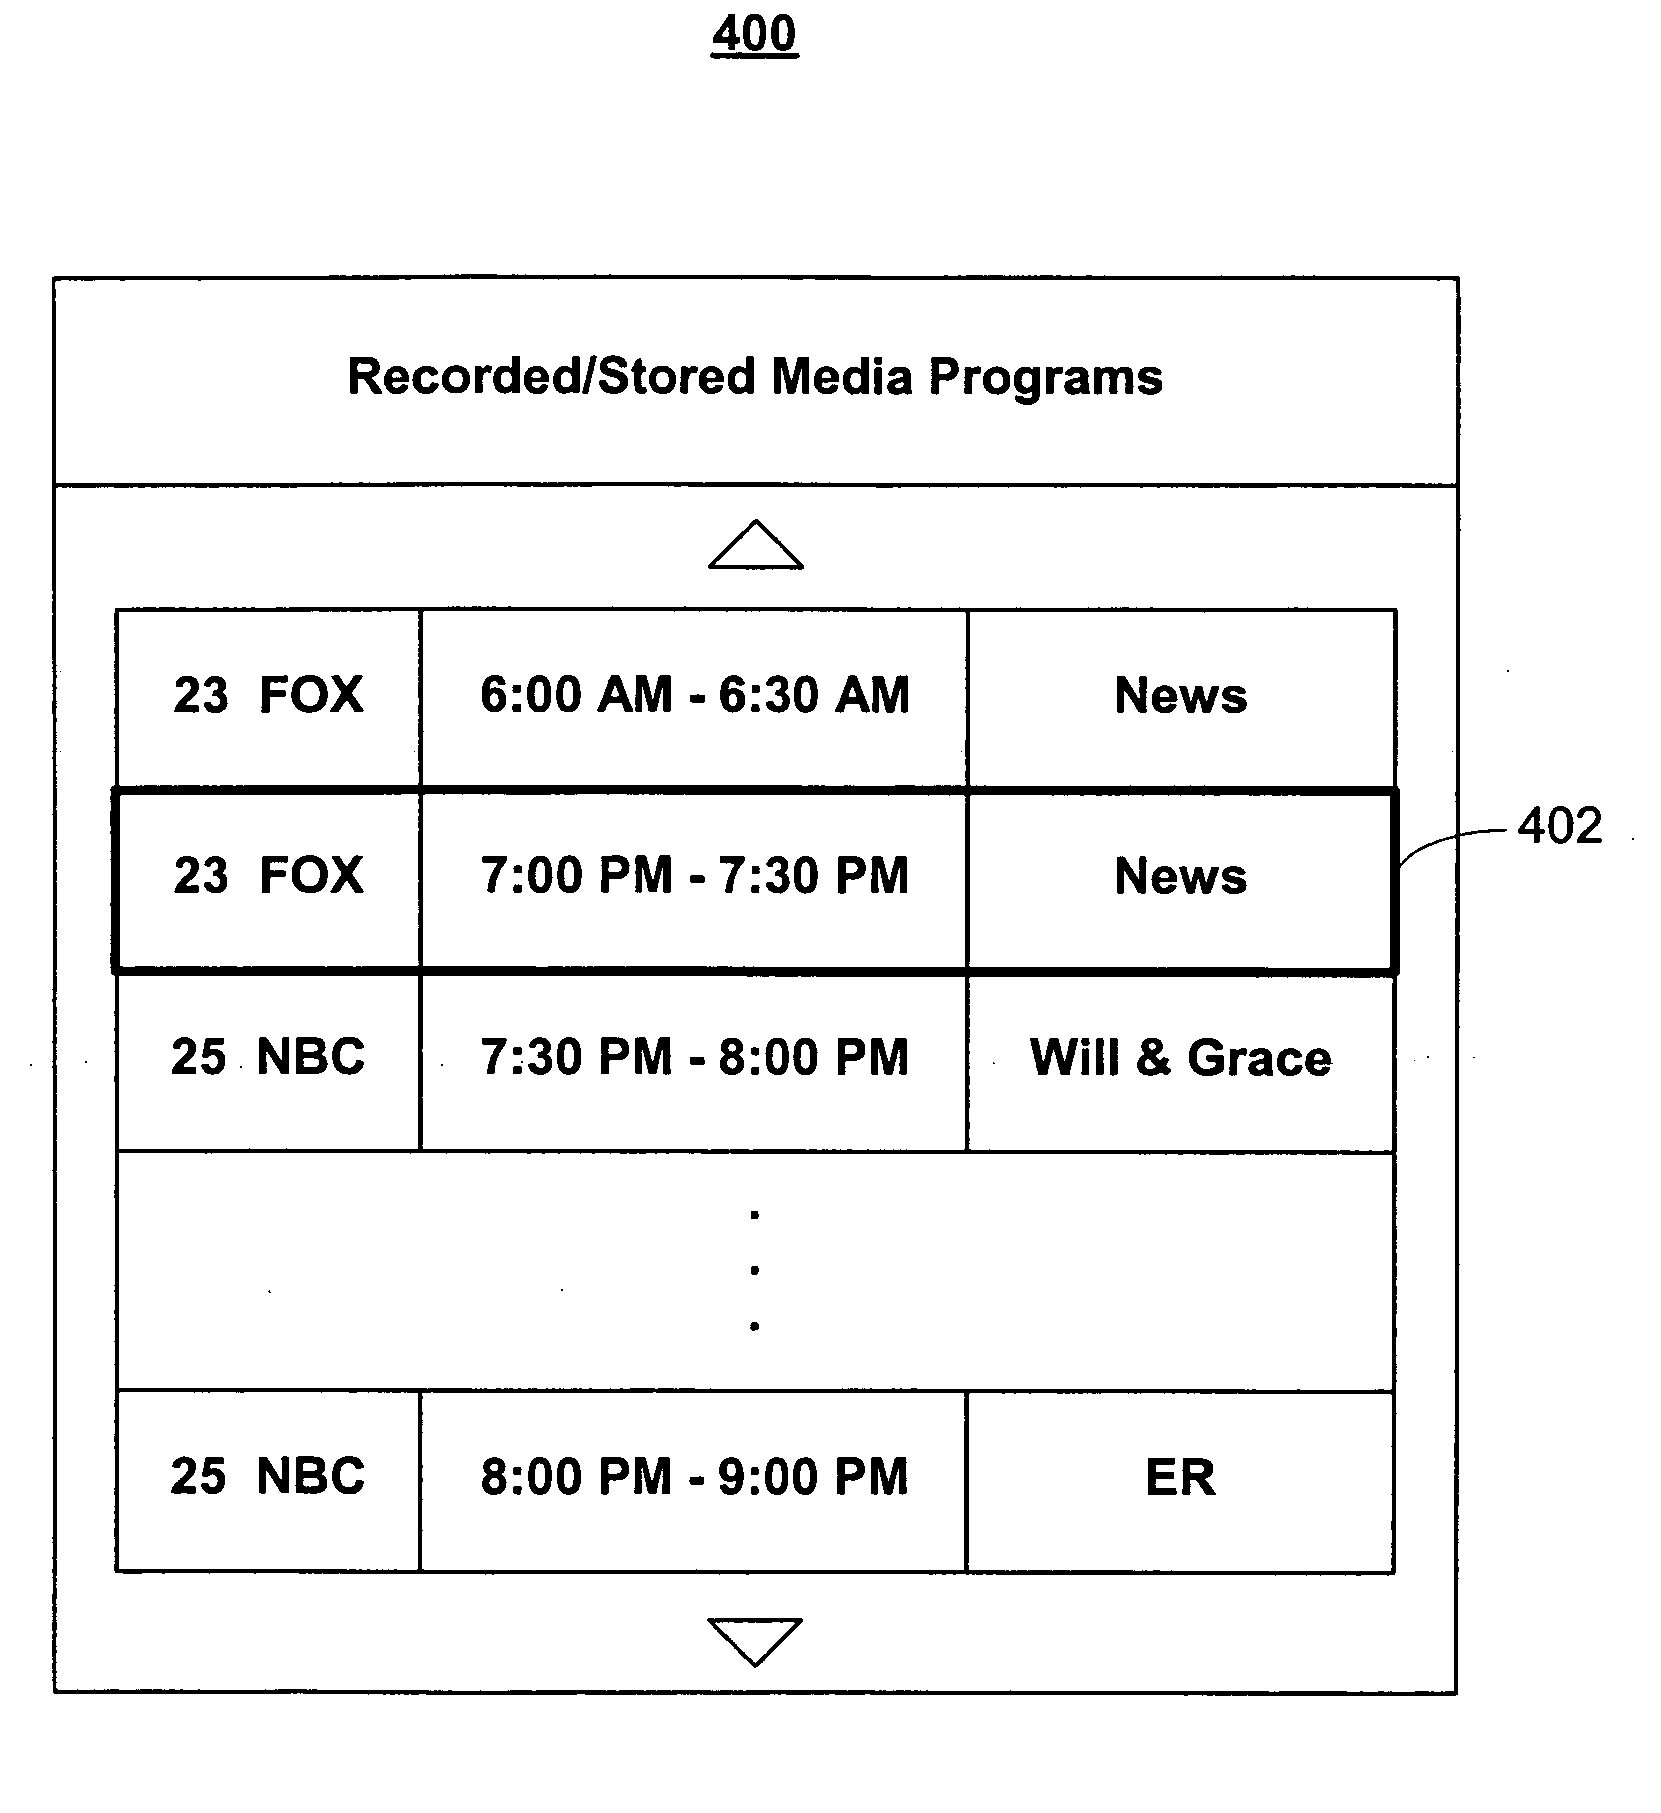 Systems and methods for accessing media program options based on program segment interest